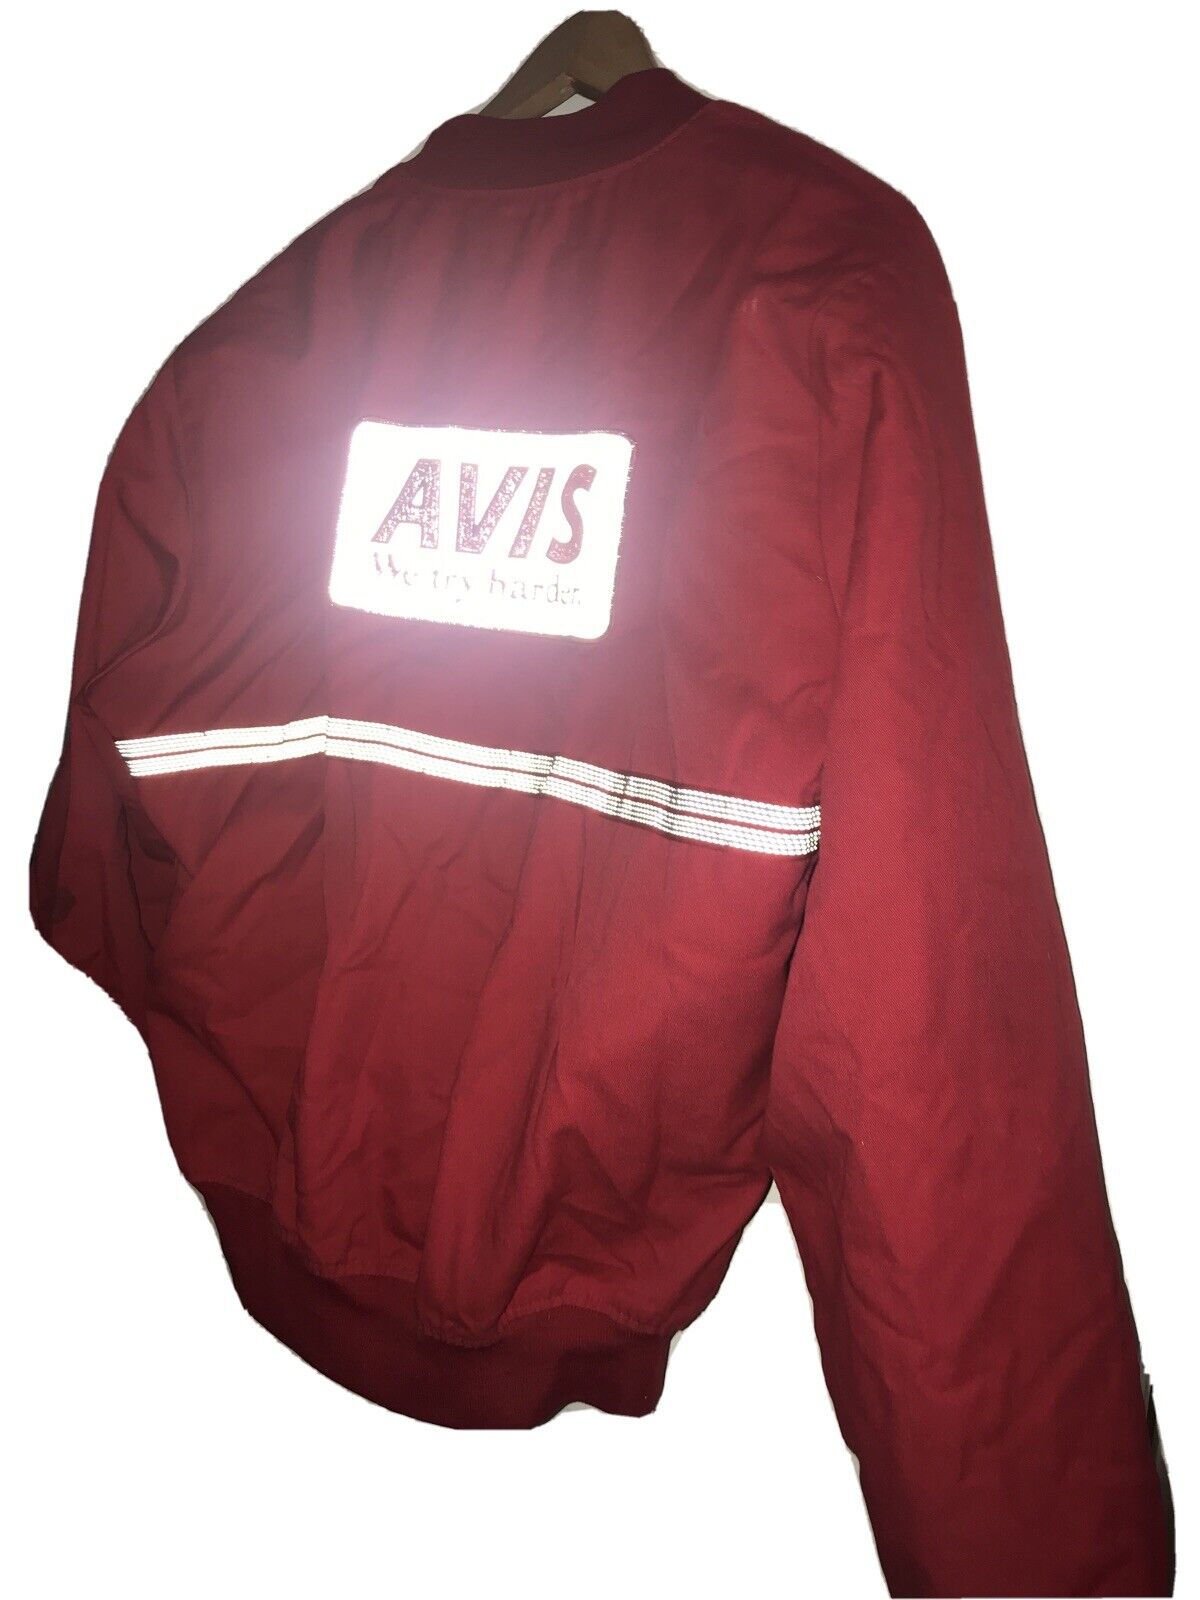 Vtg Avis Rent a Car Big Patch Logo Mechanic Employee Jacket 1980s USA made Men L